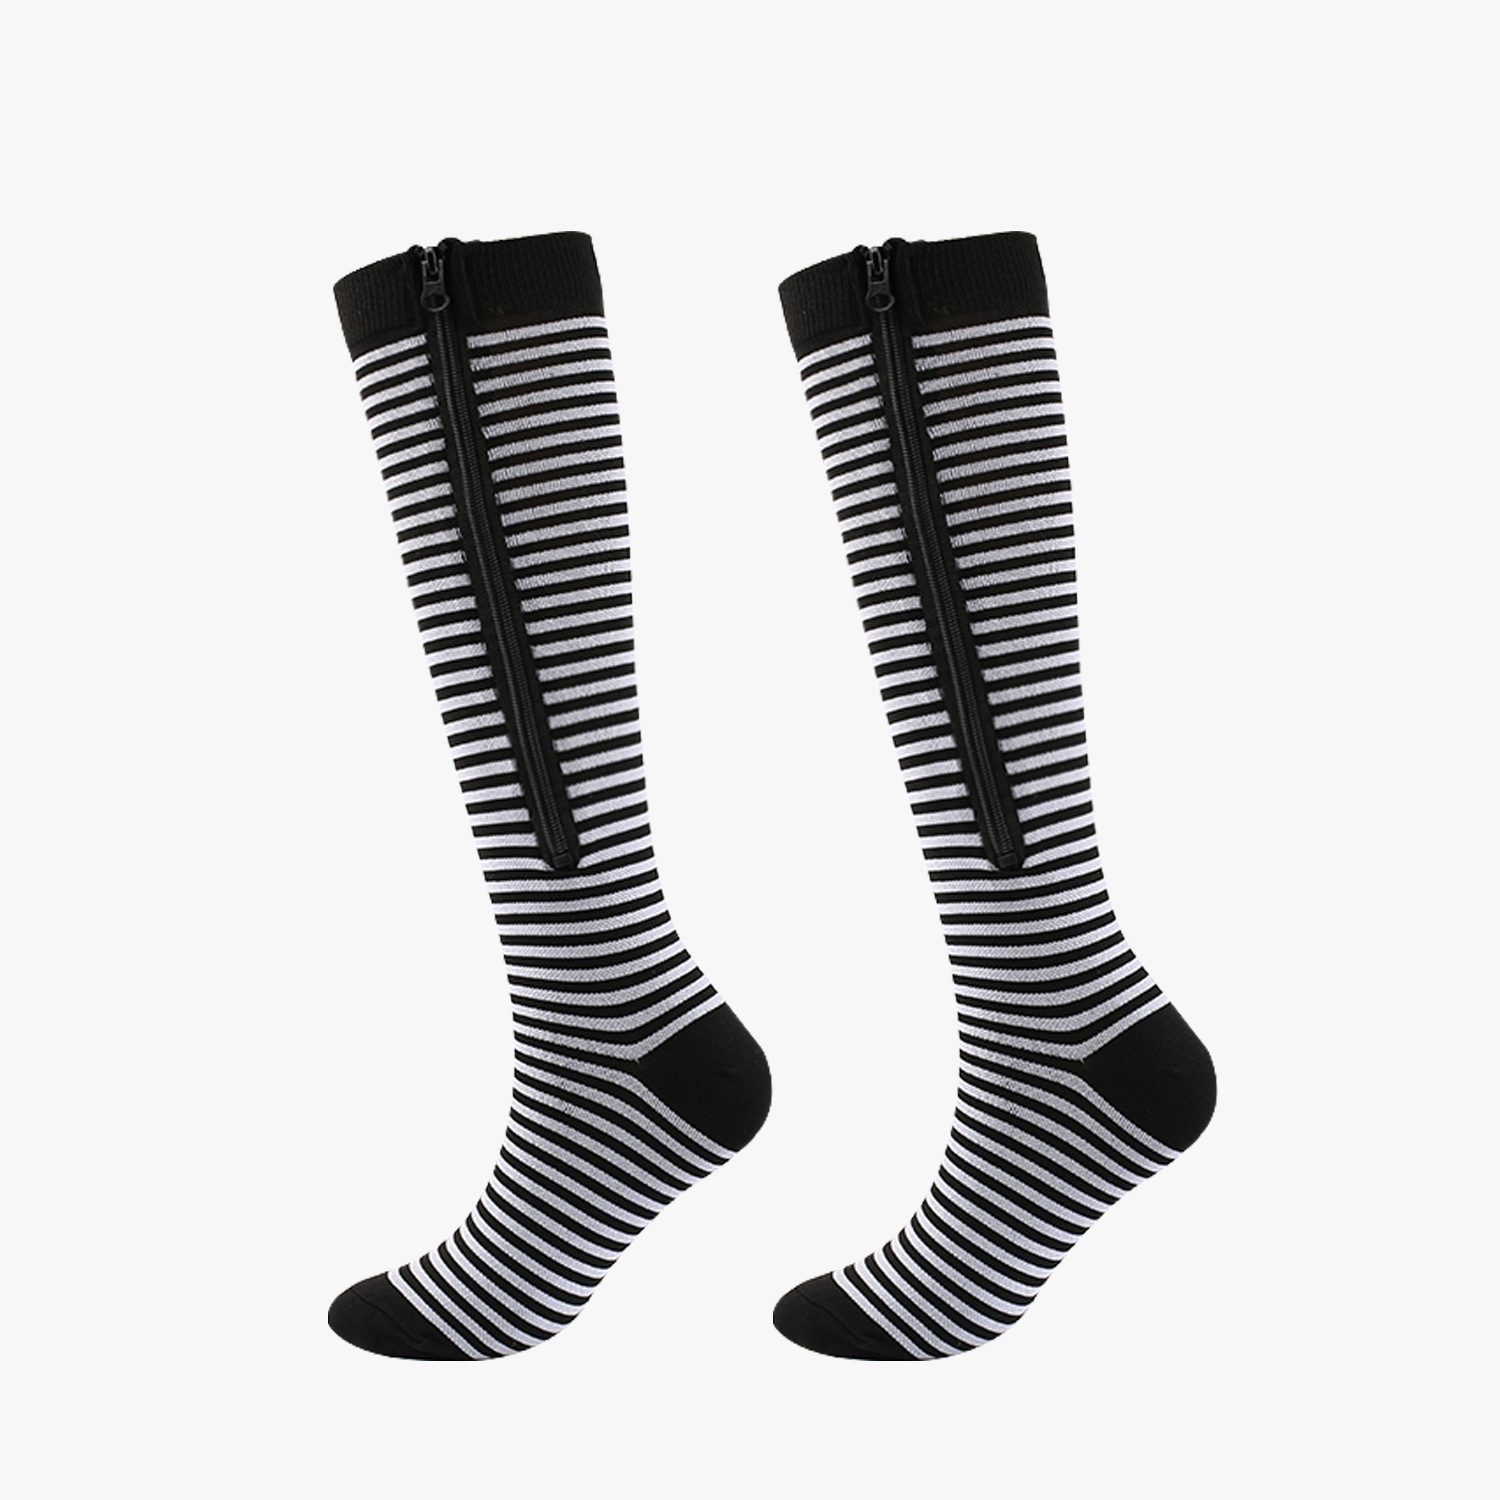 Compression Socks Zipper - Temu